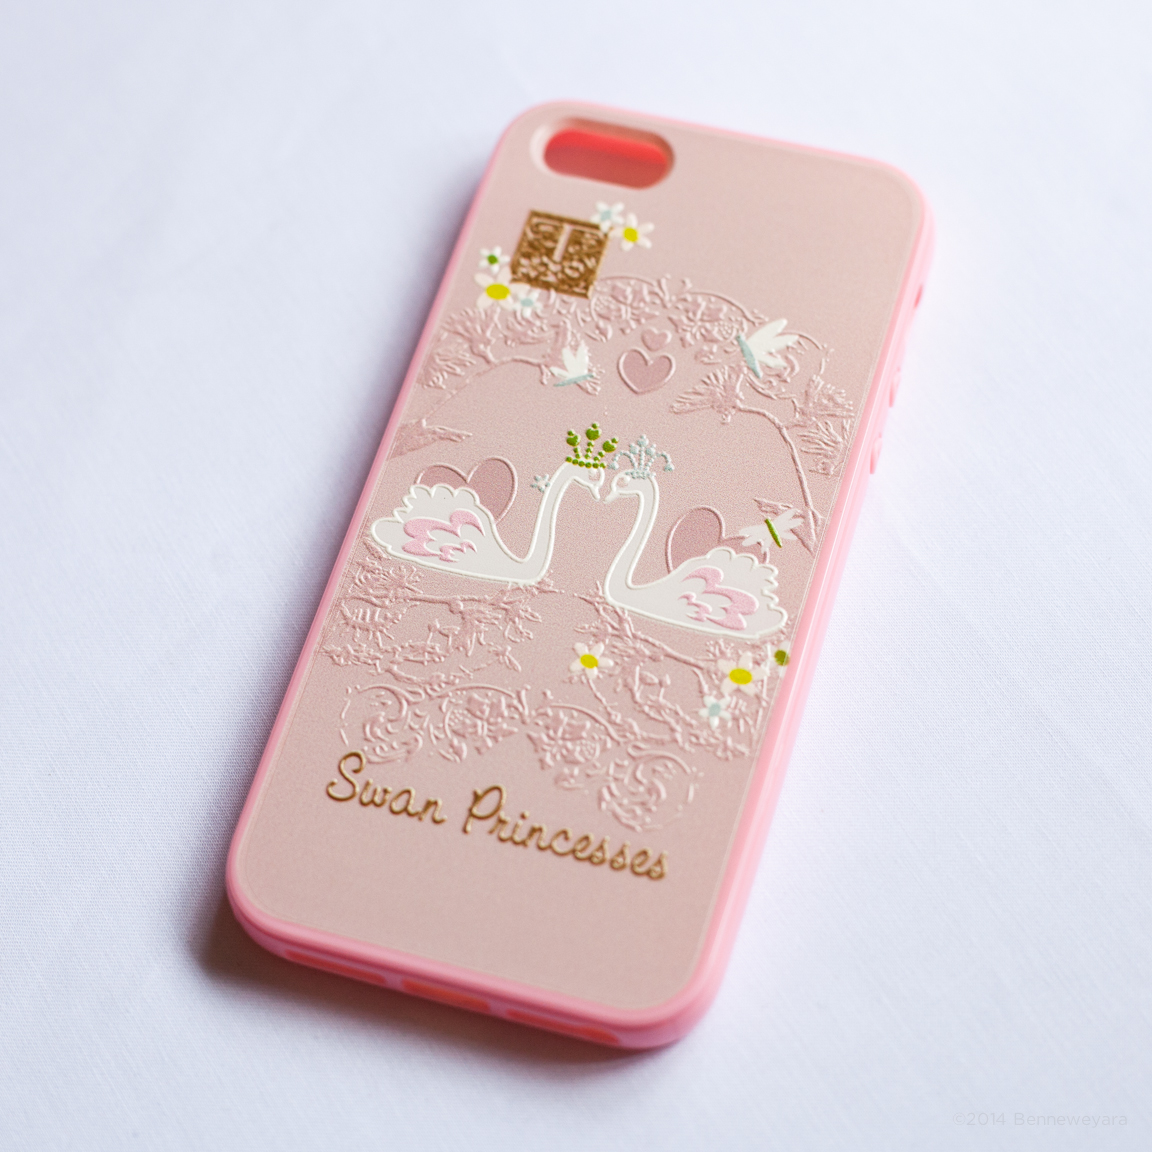 Apple iPhone 5 5s Hardcase Swan Princess Koleksi Kirana